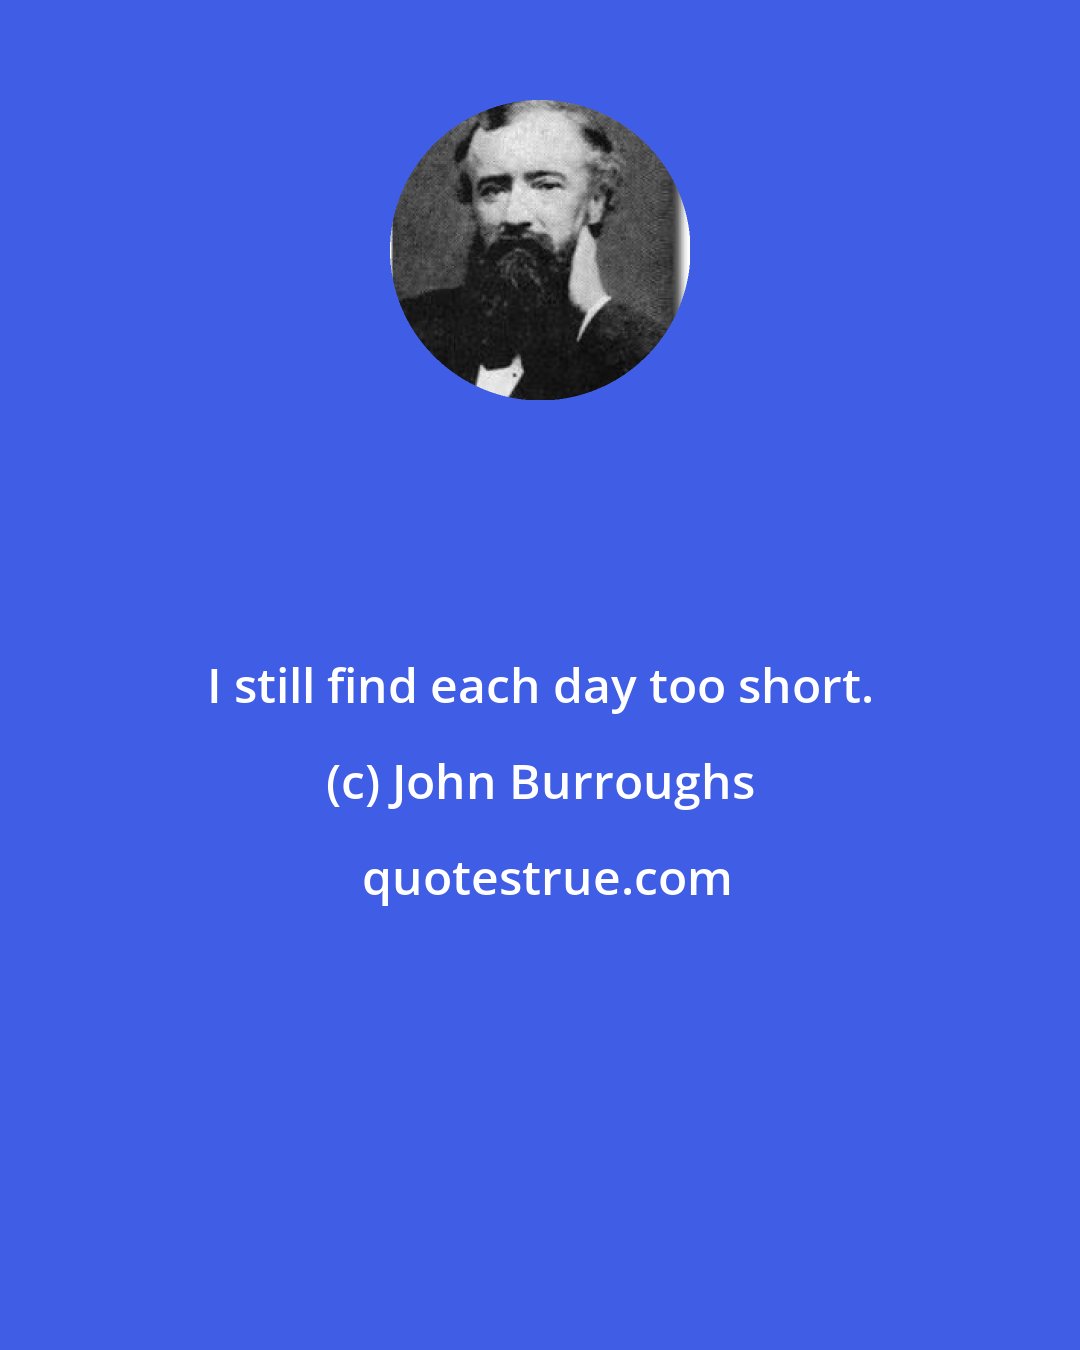 John Burroughs: I still find each day too short.